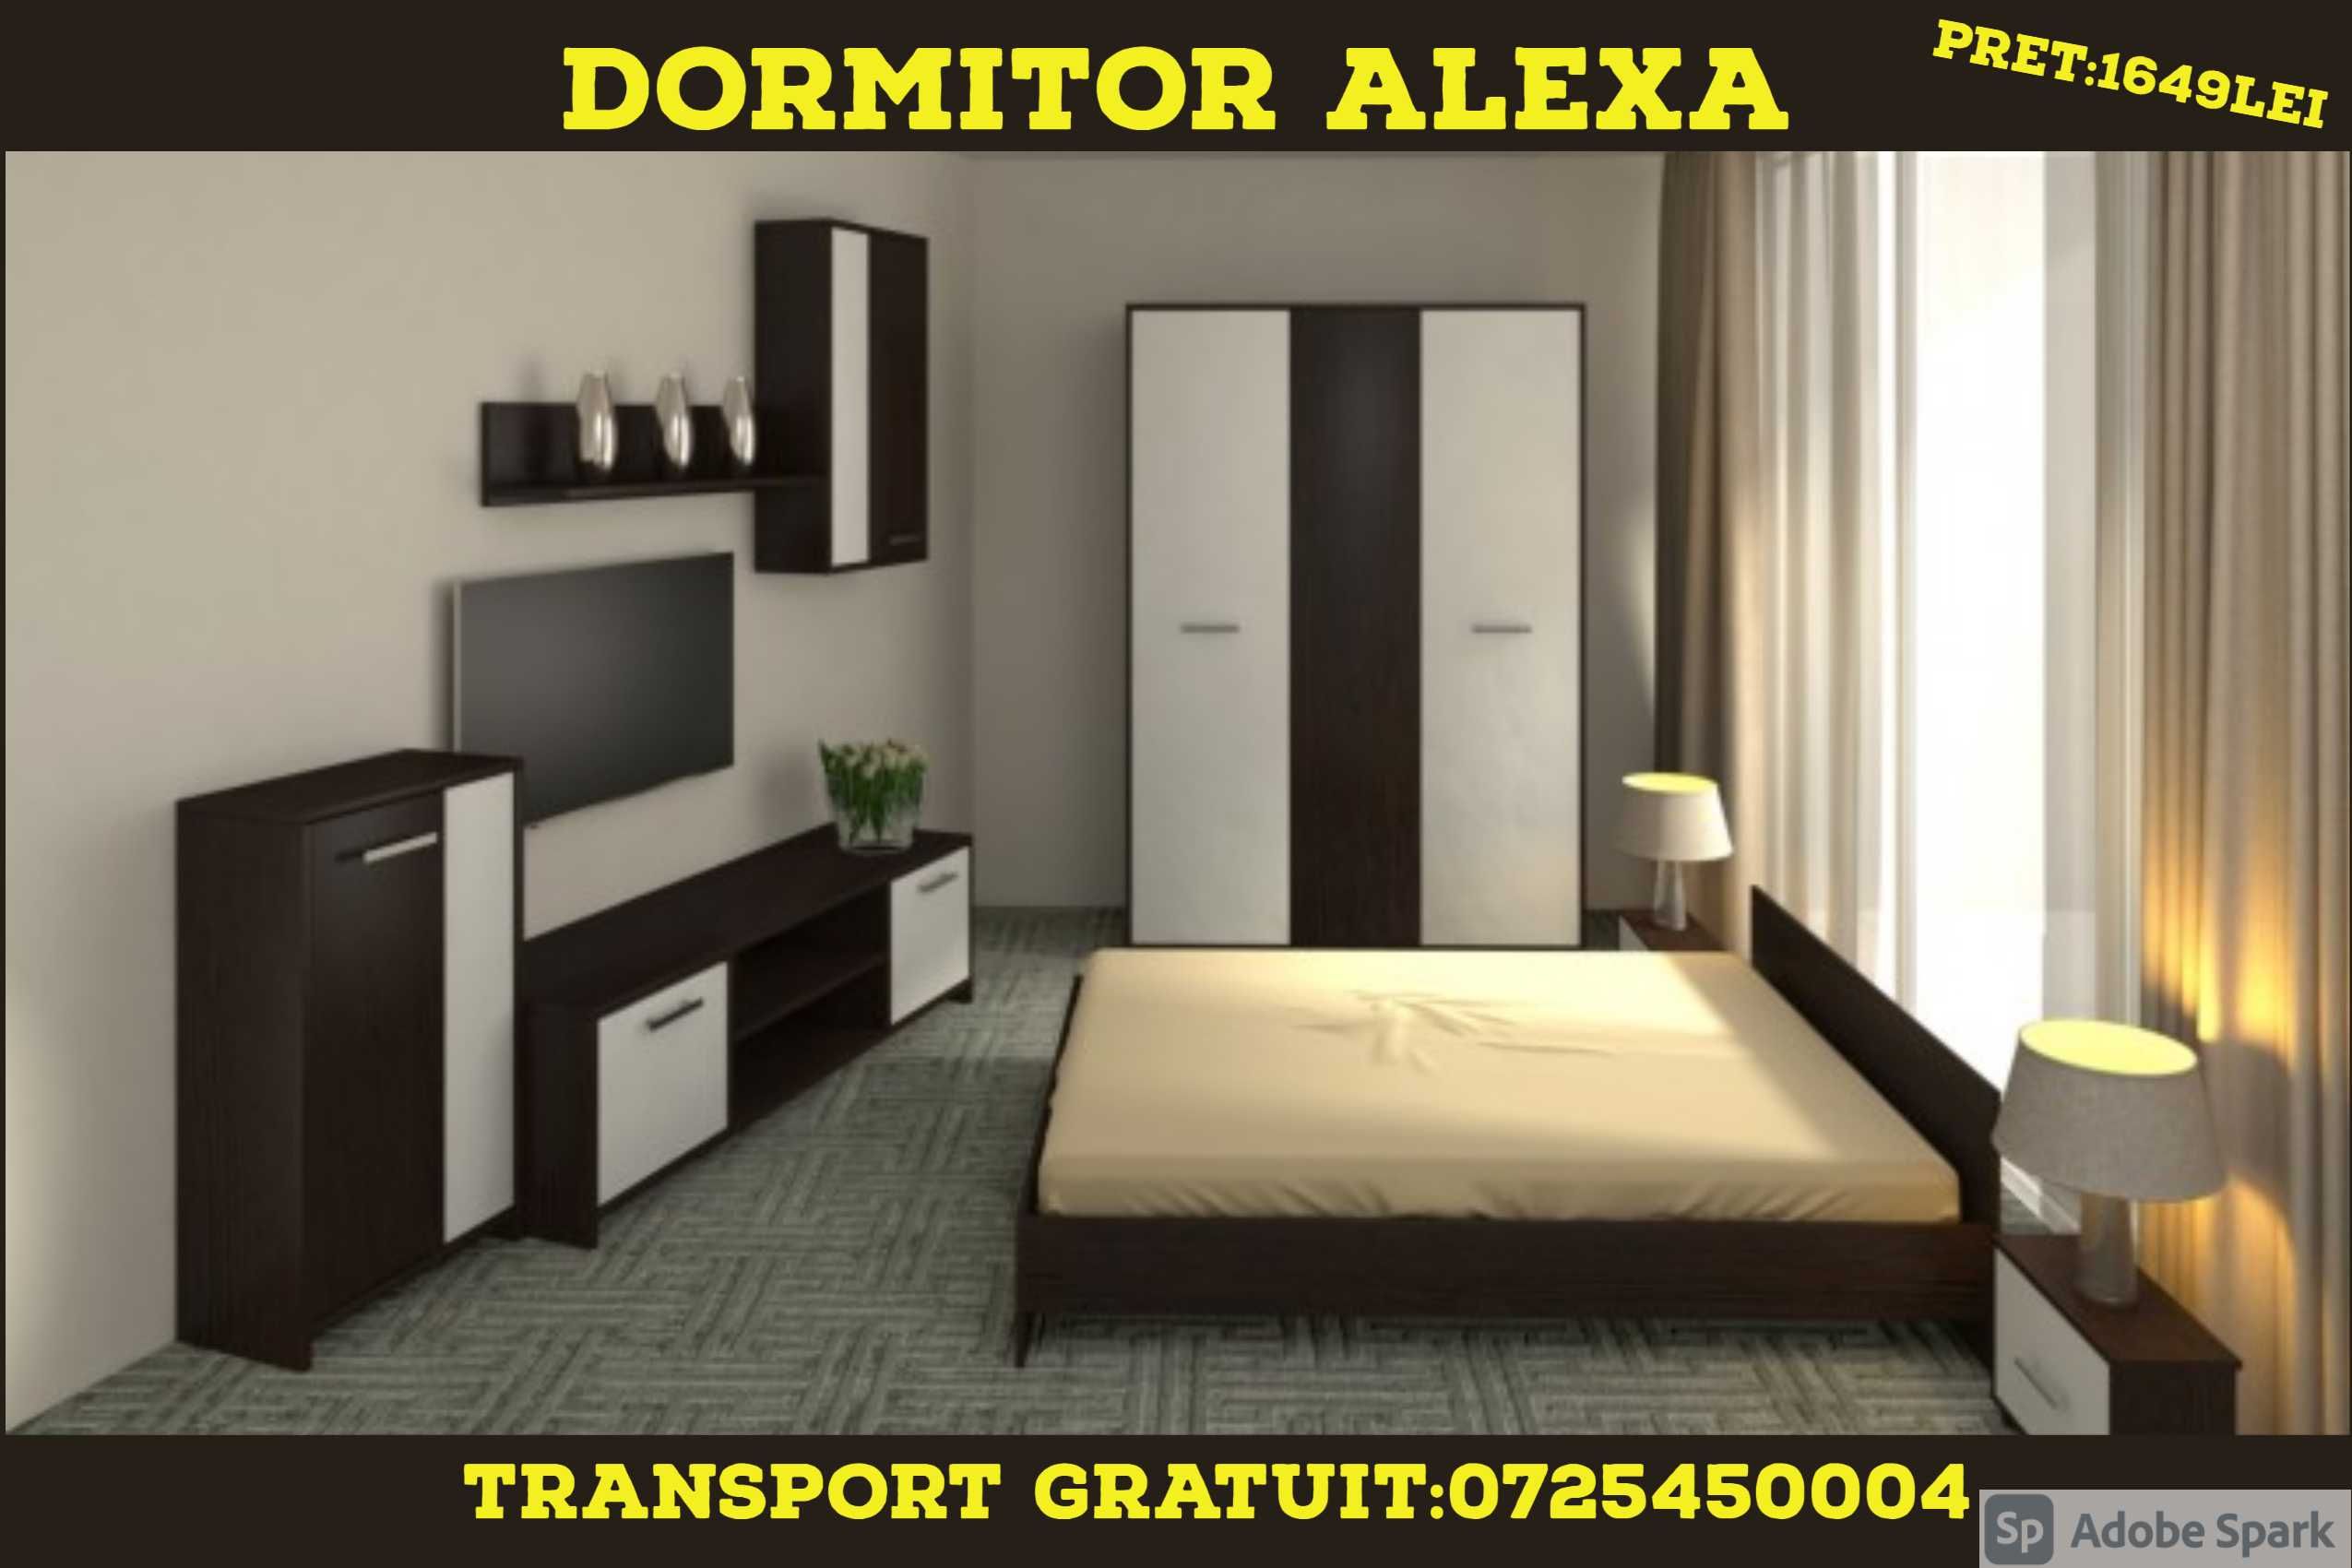 Oferta Dormitor Alexa wenge-transport gratuit RO